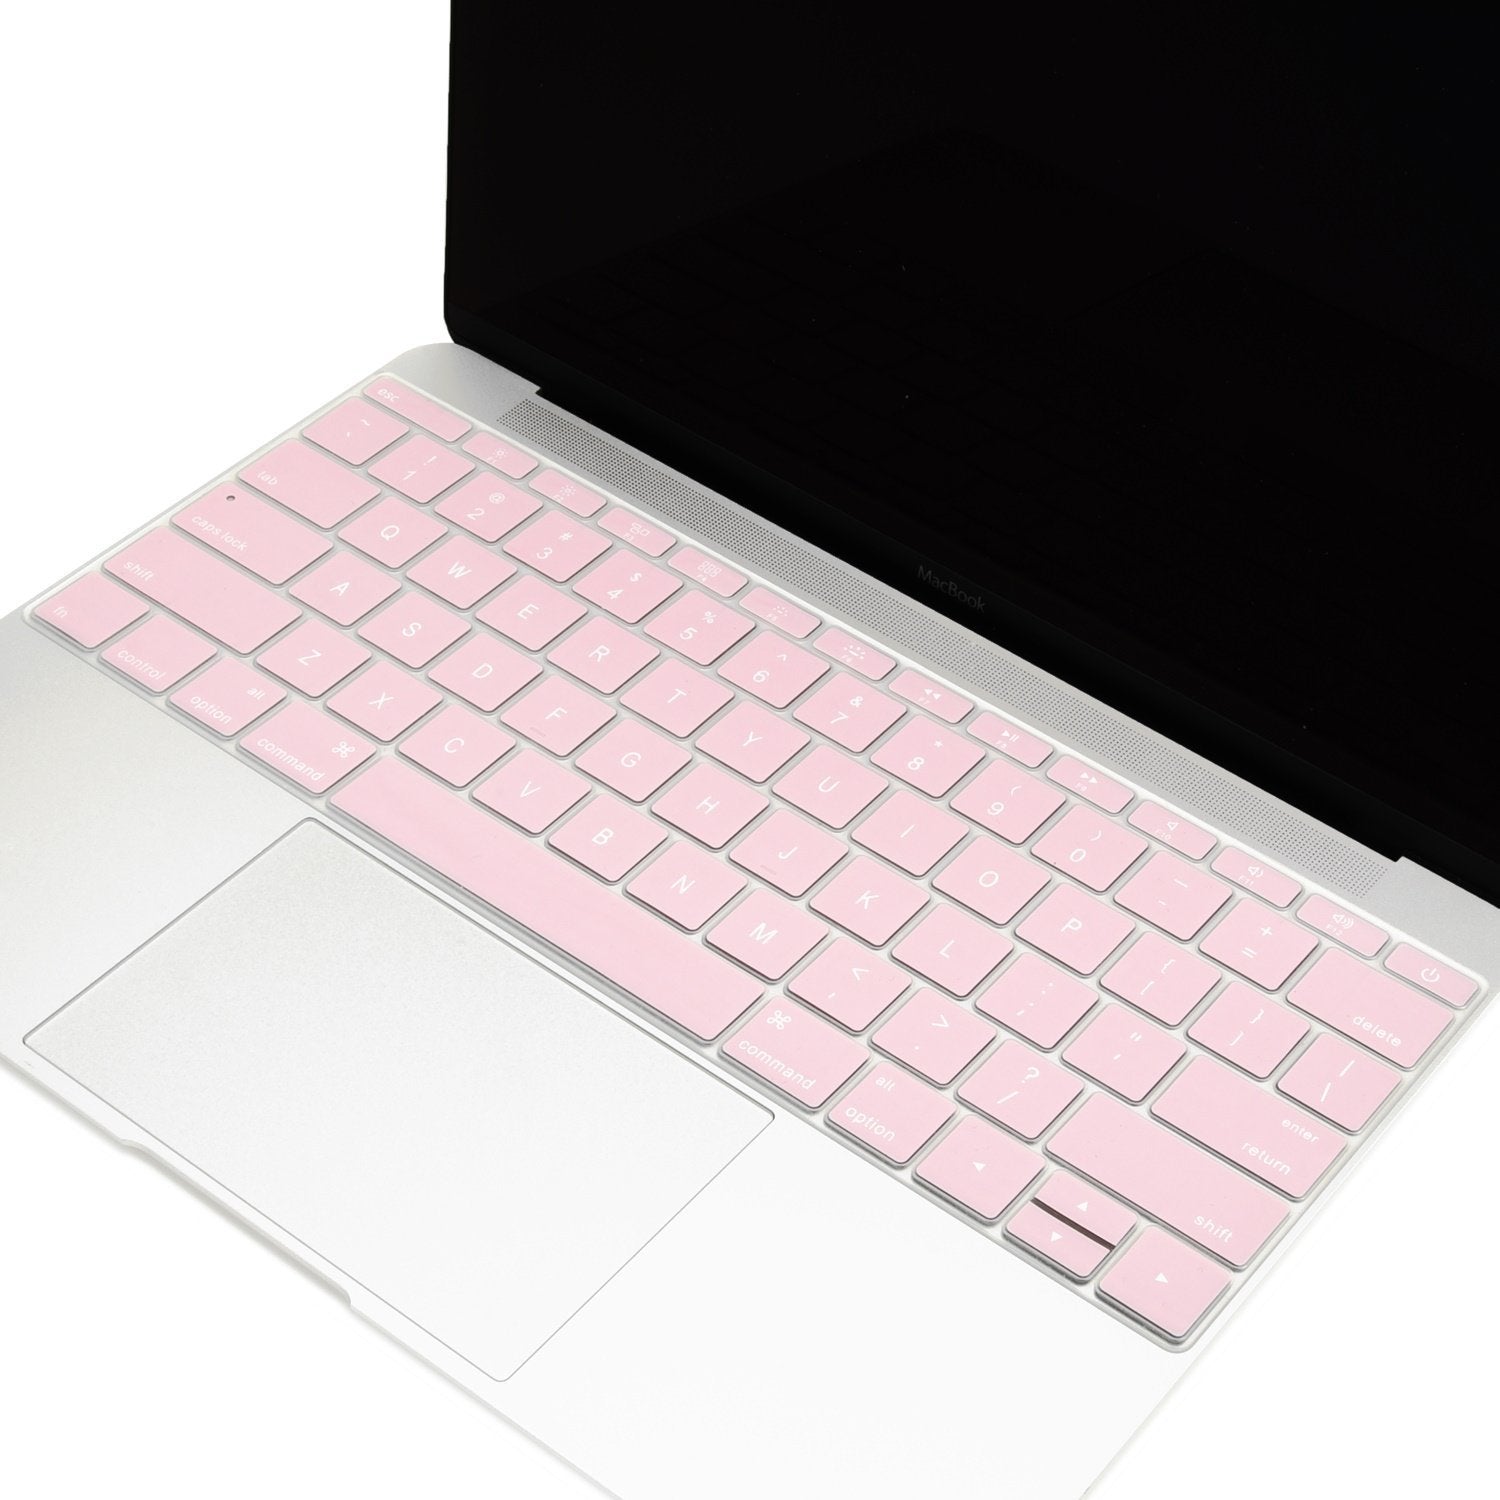 MacBook Case Set - 360 Pink Beach - colourbanana